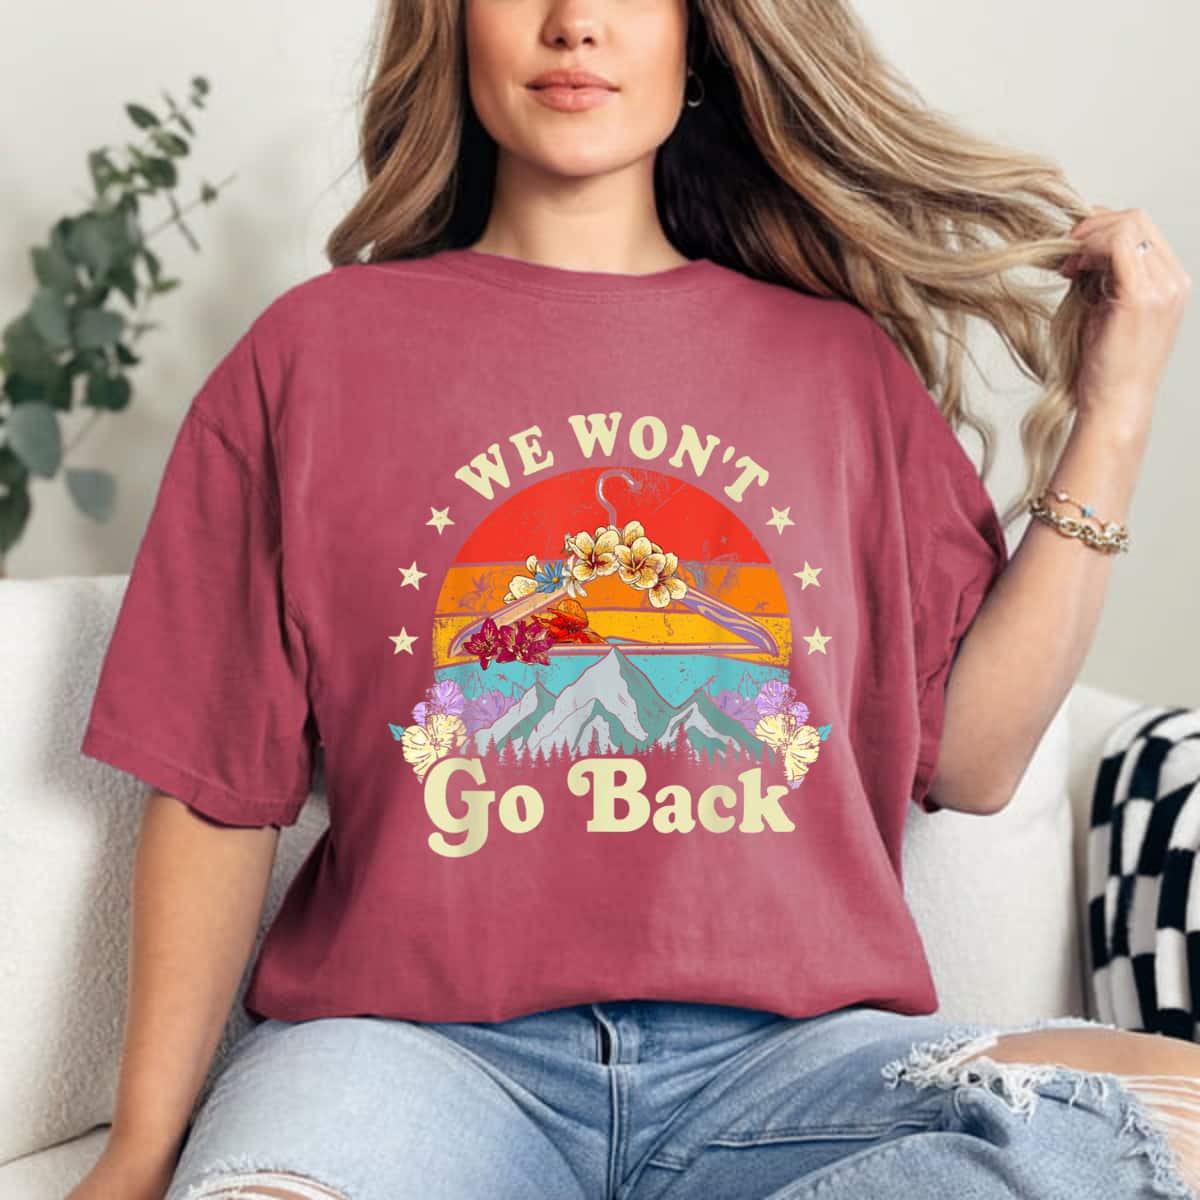 We Won't Go Back Roe Pro Choice Rights Feminism T-Shirt